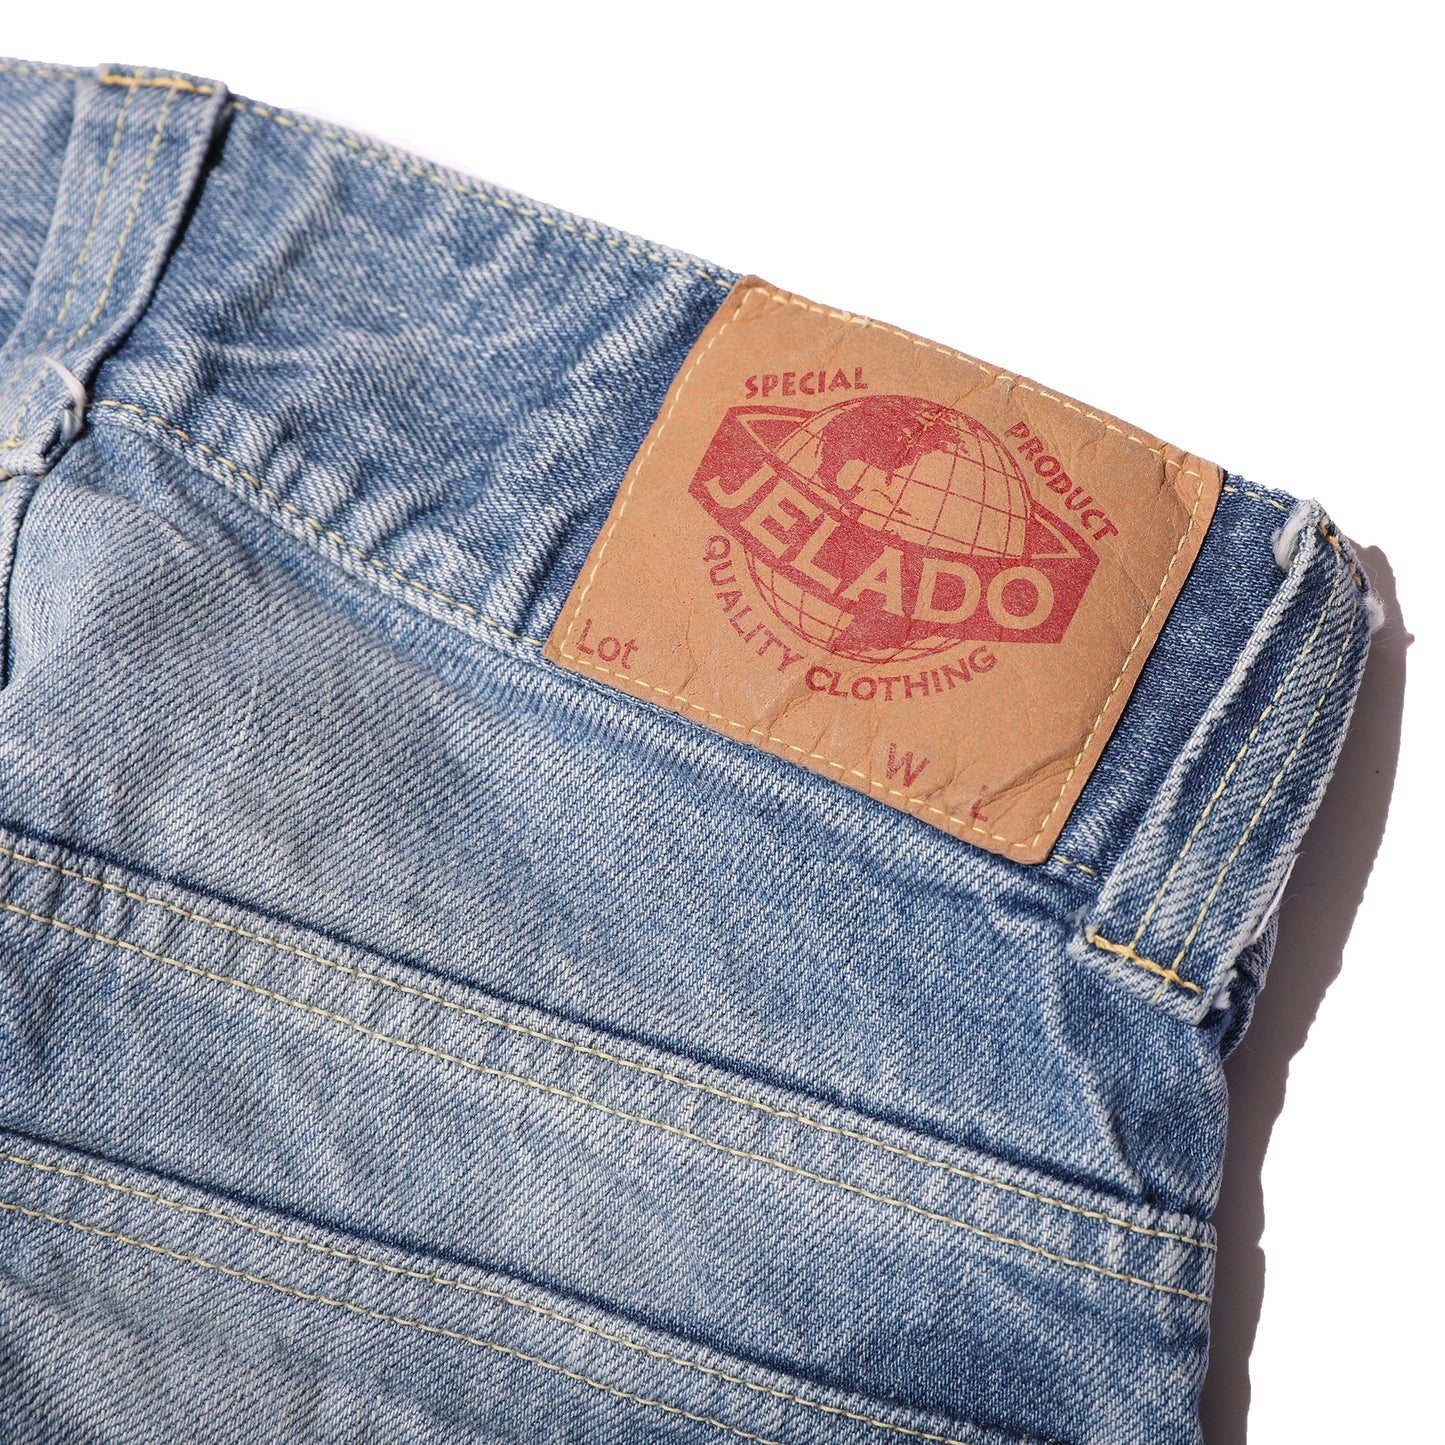 JELADO Denim Bush Pants(デニムブッシュパンツ)Vintage Finish 【JP73334】